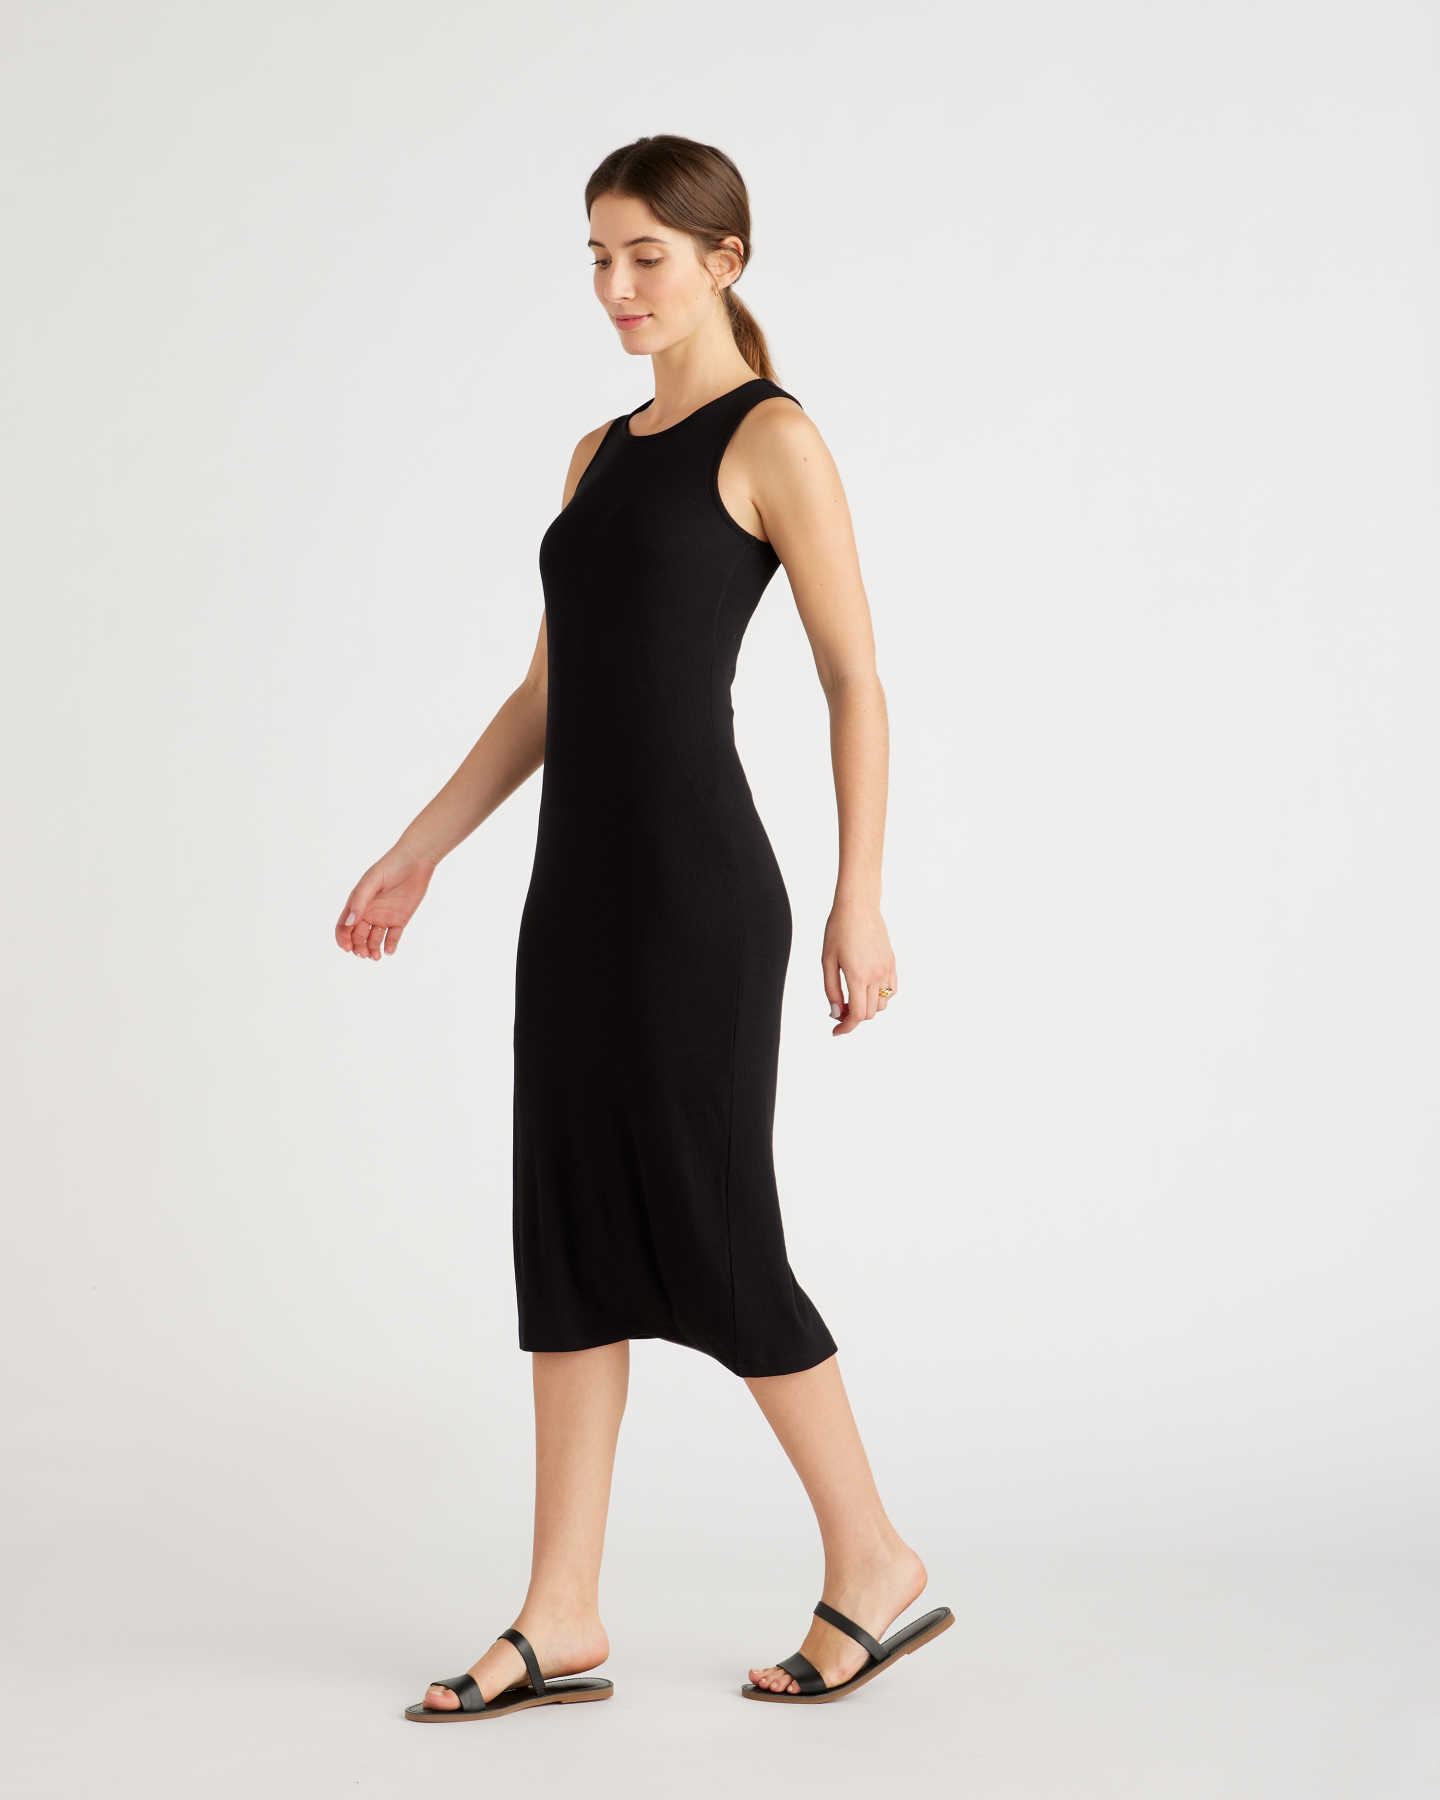 Woman wearing a rib knit dress in black walking